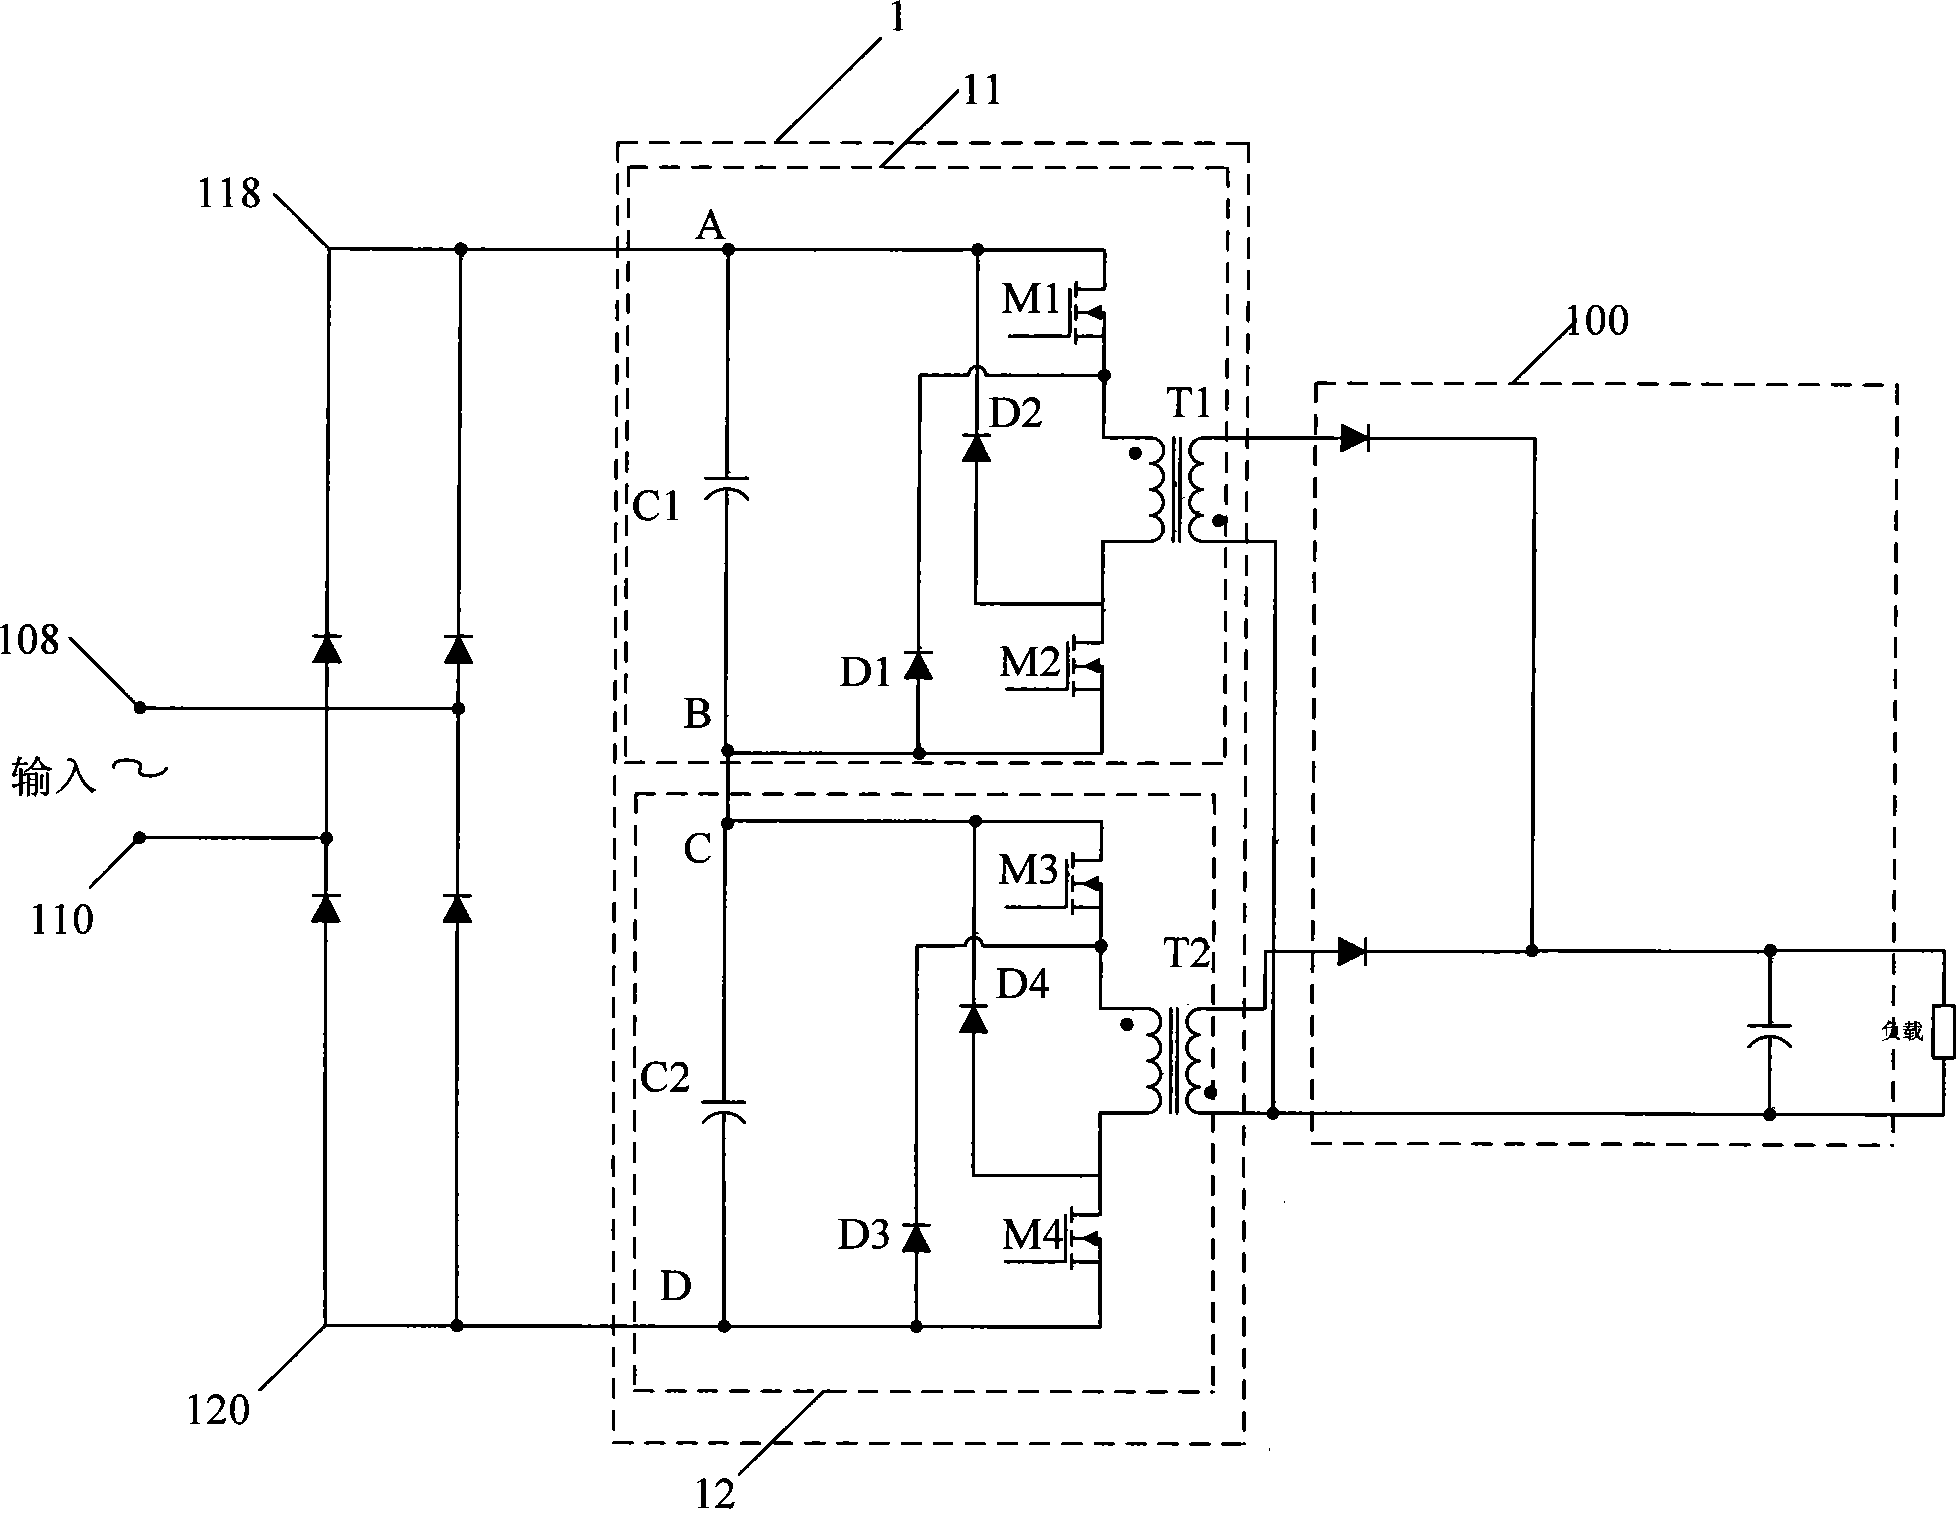 Power source module with wide input voltage range